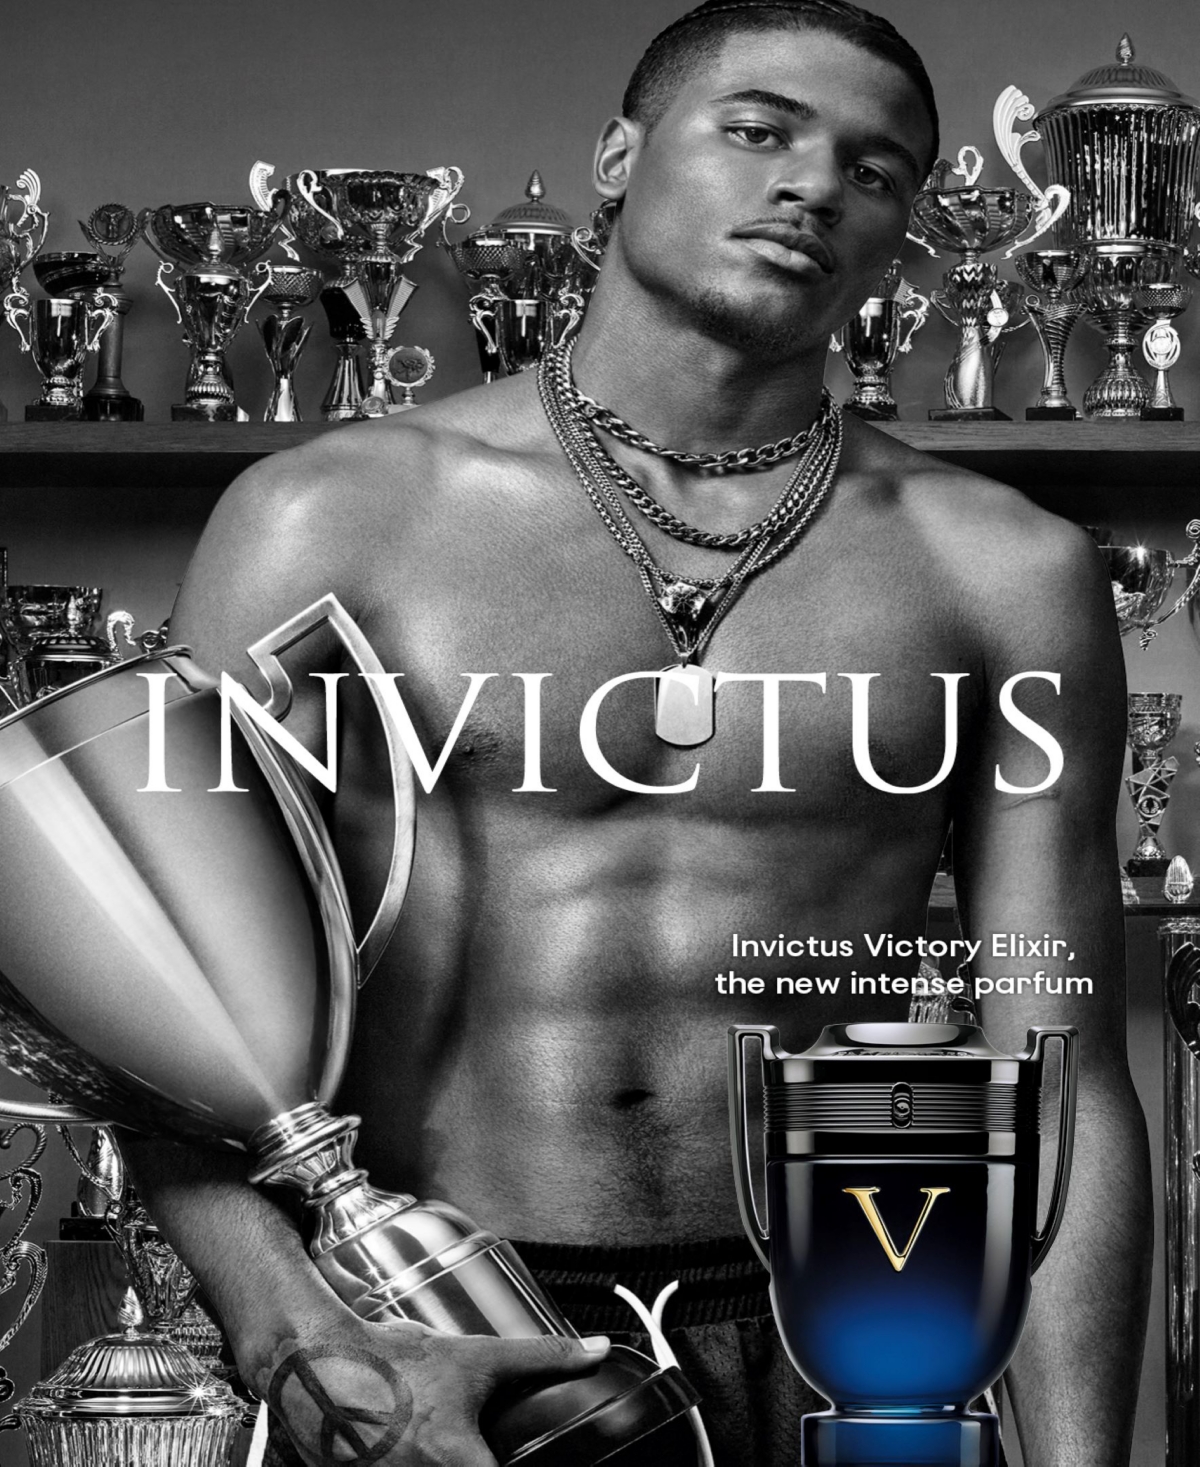 Paco Rabanne Men's Invictus Victory Eau de Parfum Extreme Spray, 6.8-oz.